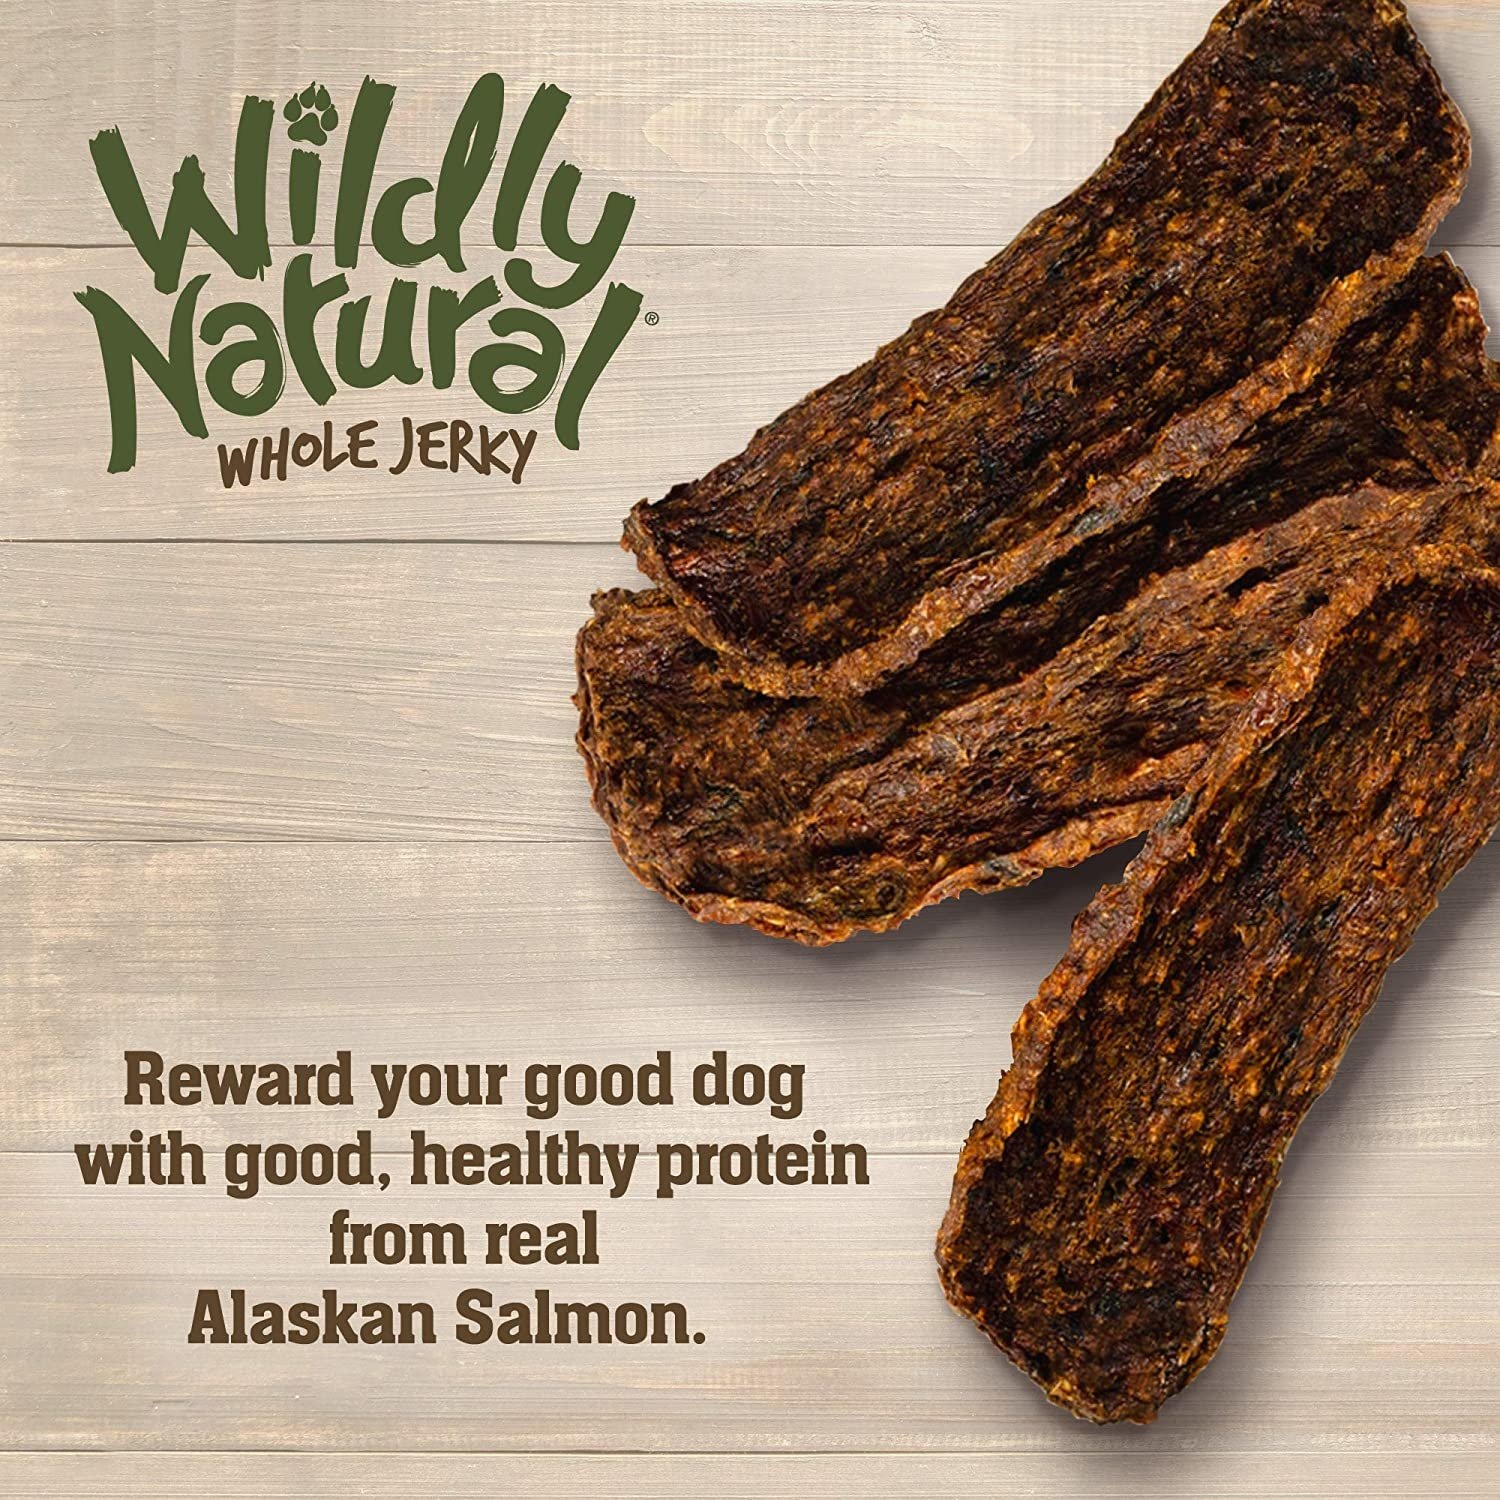 Fruitables Fruitables Wildly Natural Whole Jerky Alaskan Salmon 5oz